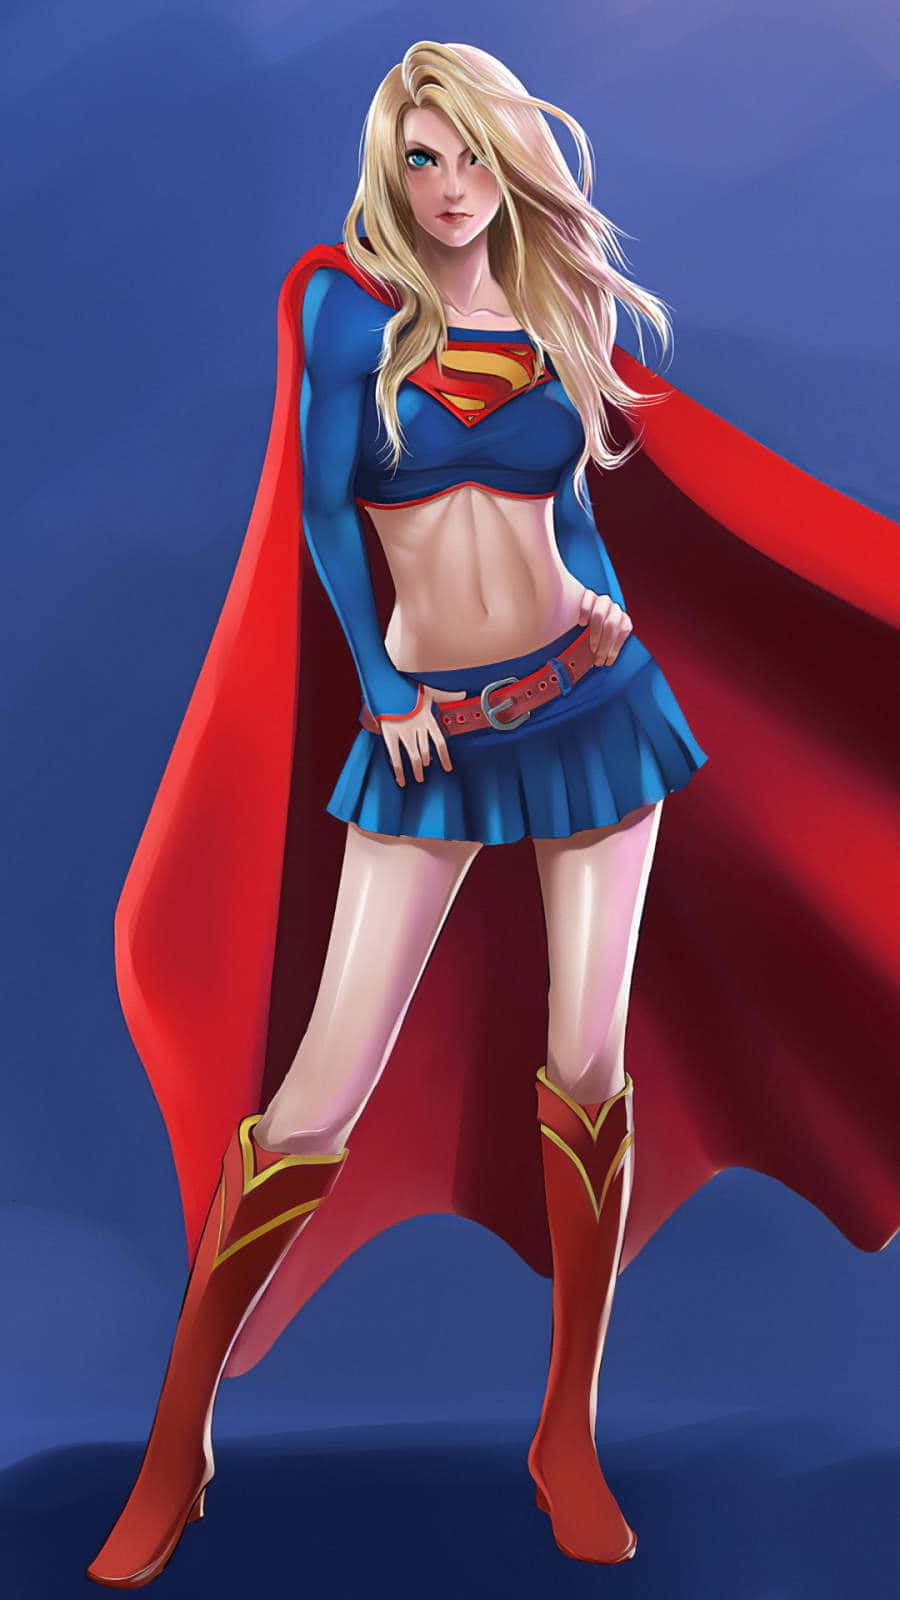 Naughty Girl Wearing Superman Attire Wallpaper